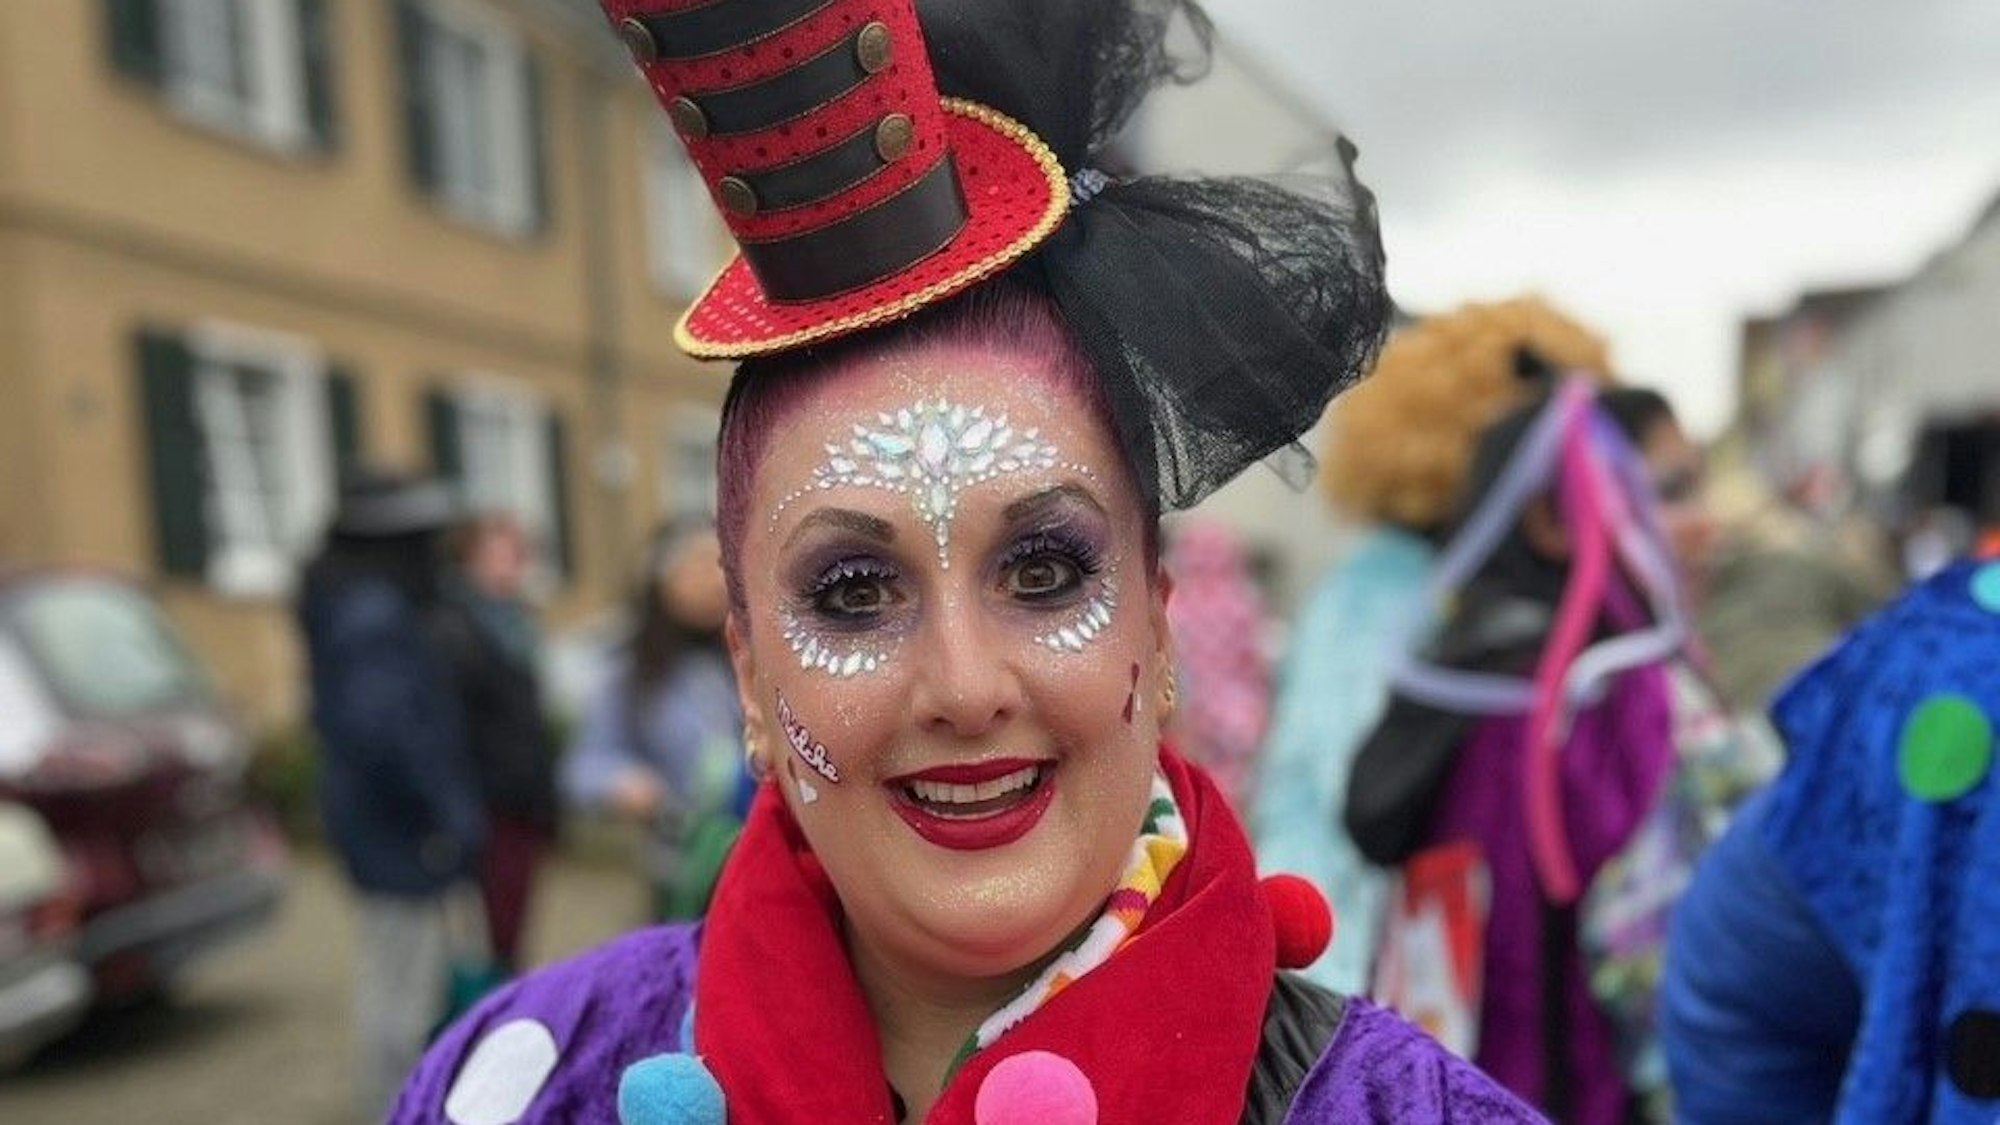 Frau trägt buntes Kostüm mit aufwendigem Make-up